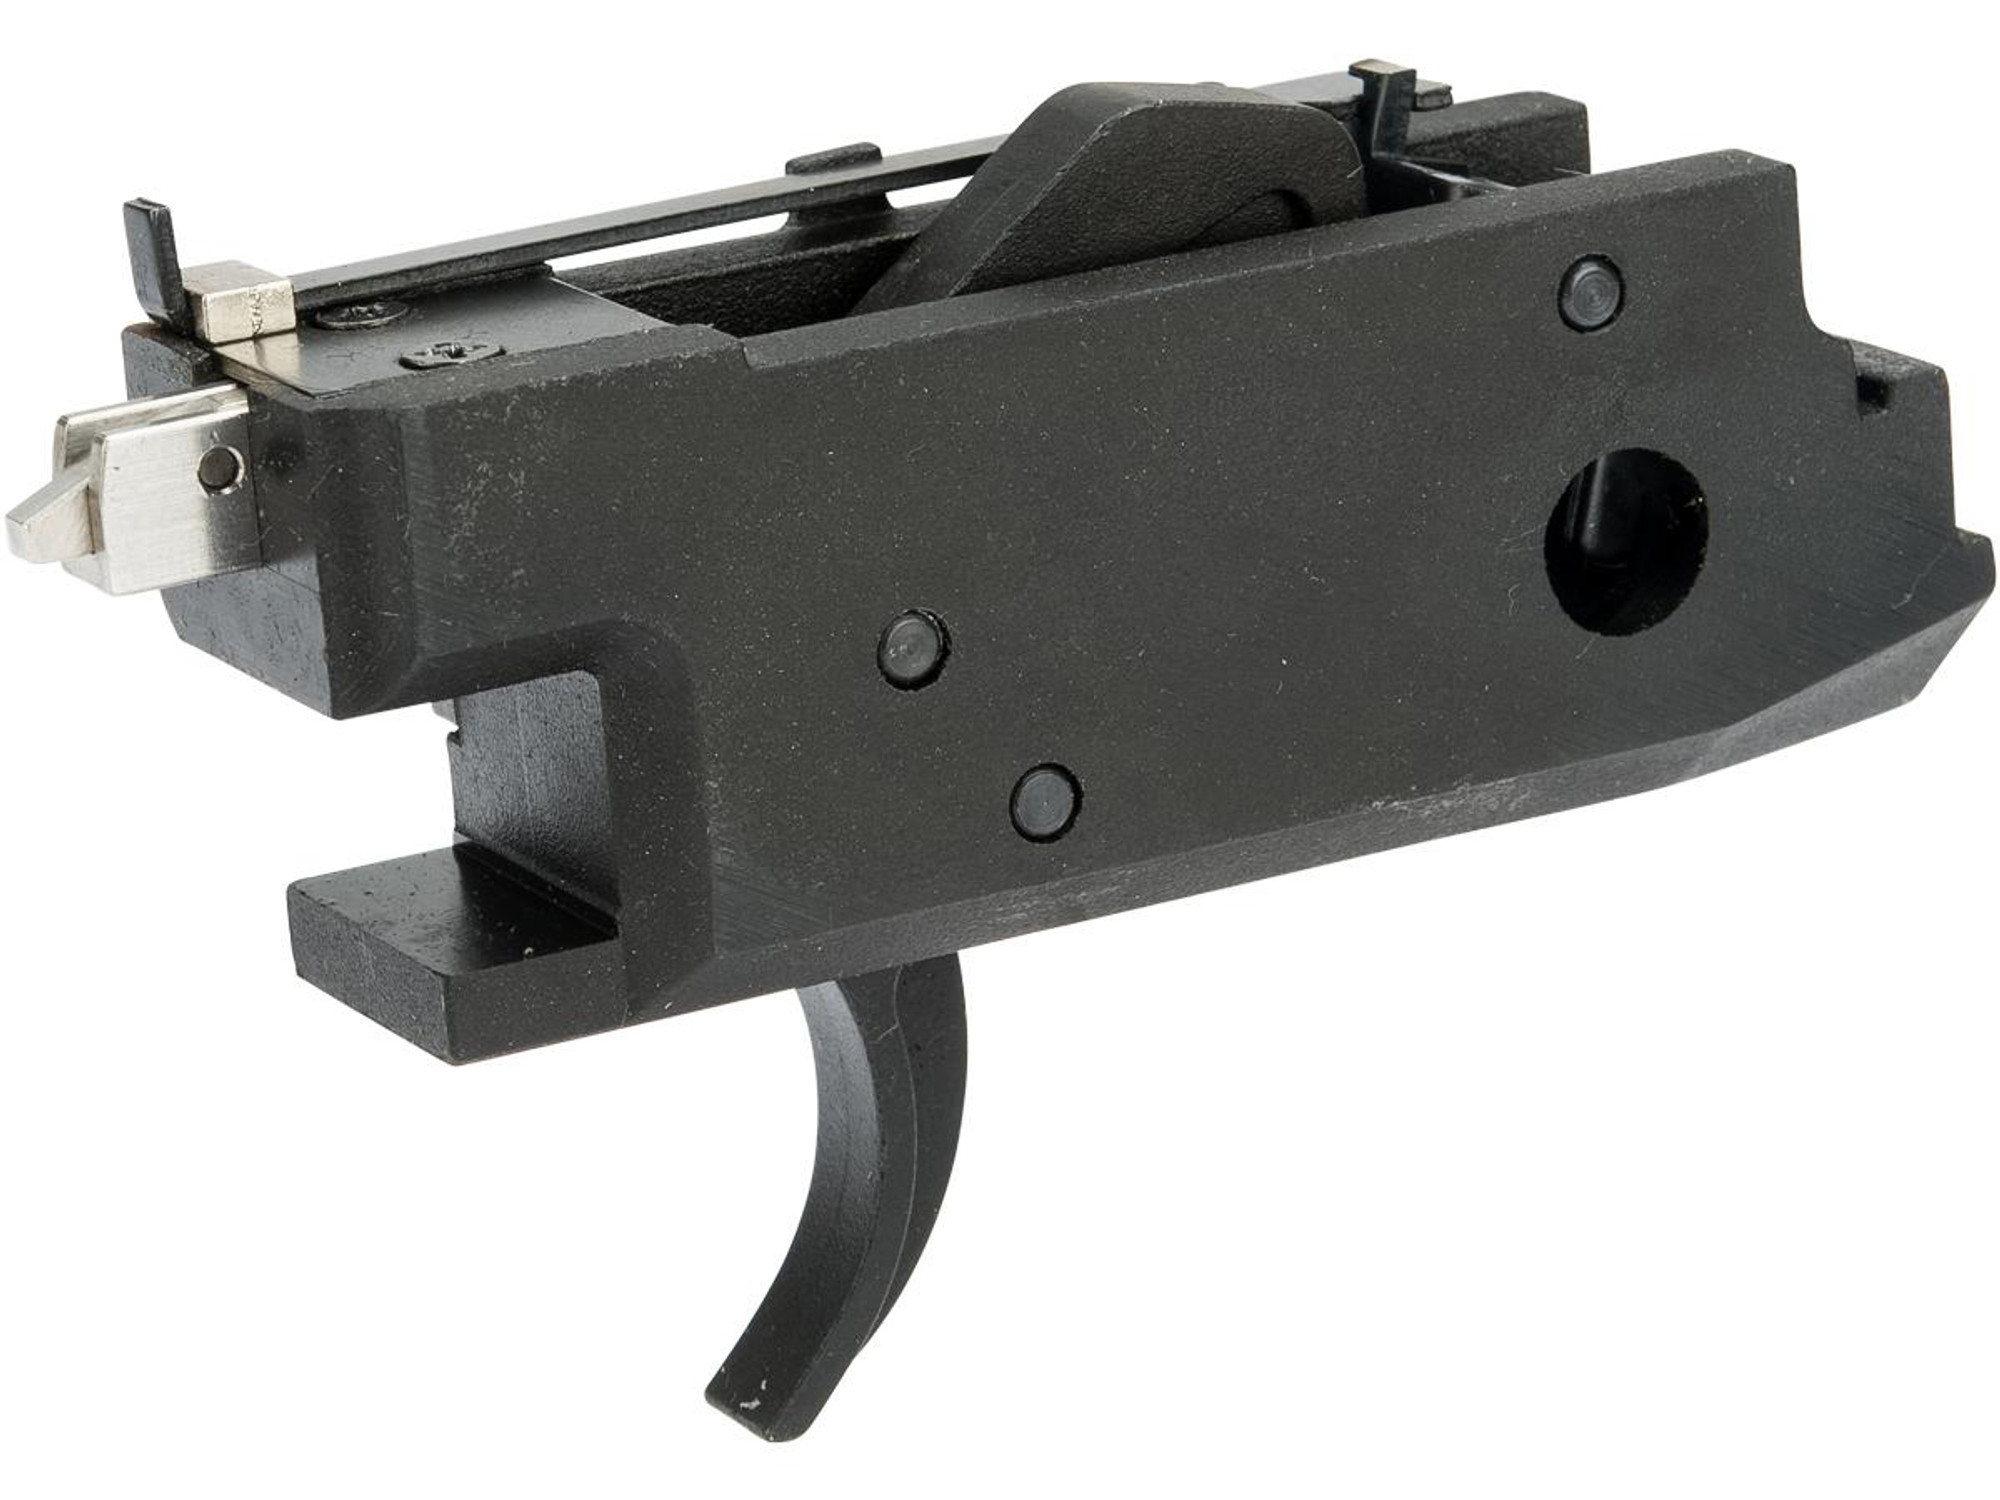 RA-Tech Complete Trigger Box for WE-Tech MSK Gas Blowback Rifles